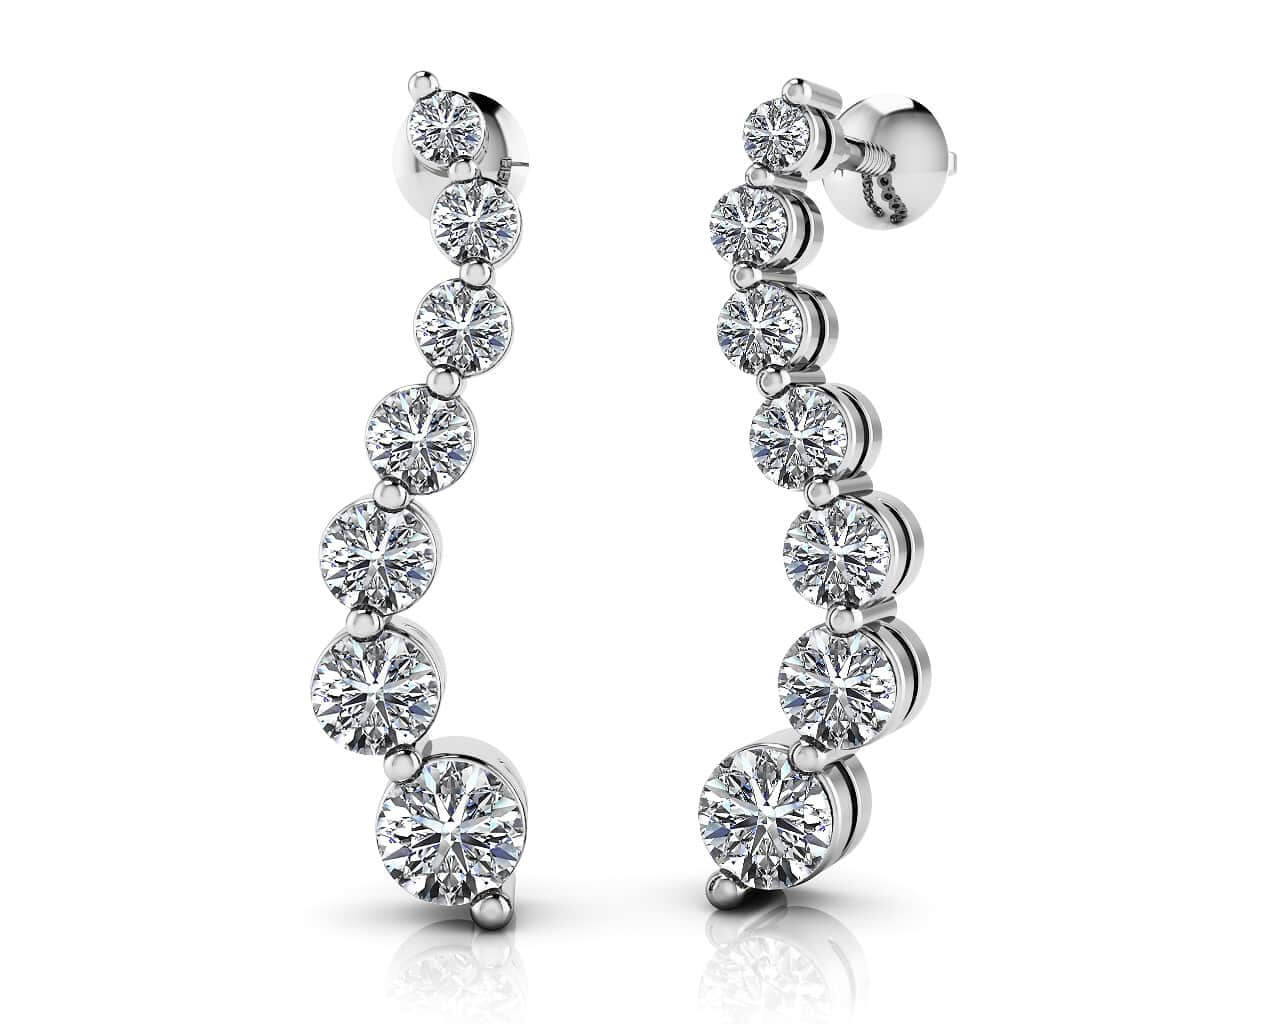 Wavy Journey Round Link Diamond Earrings 3/8 Carat Total Weight